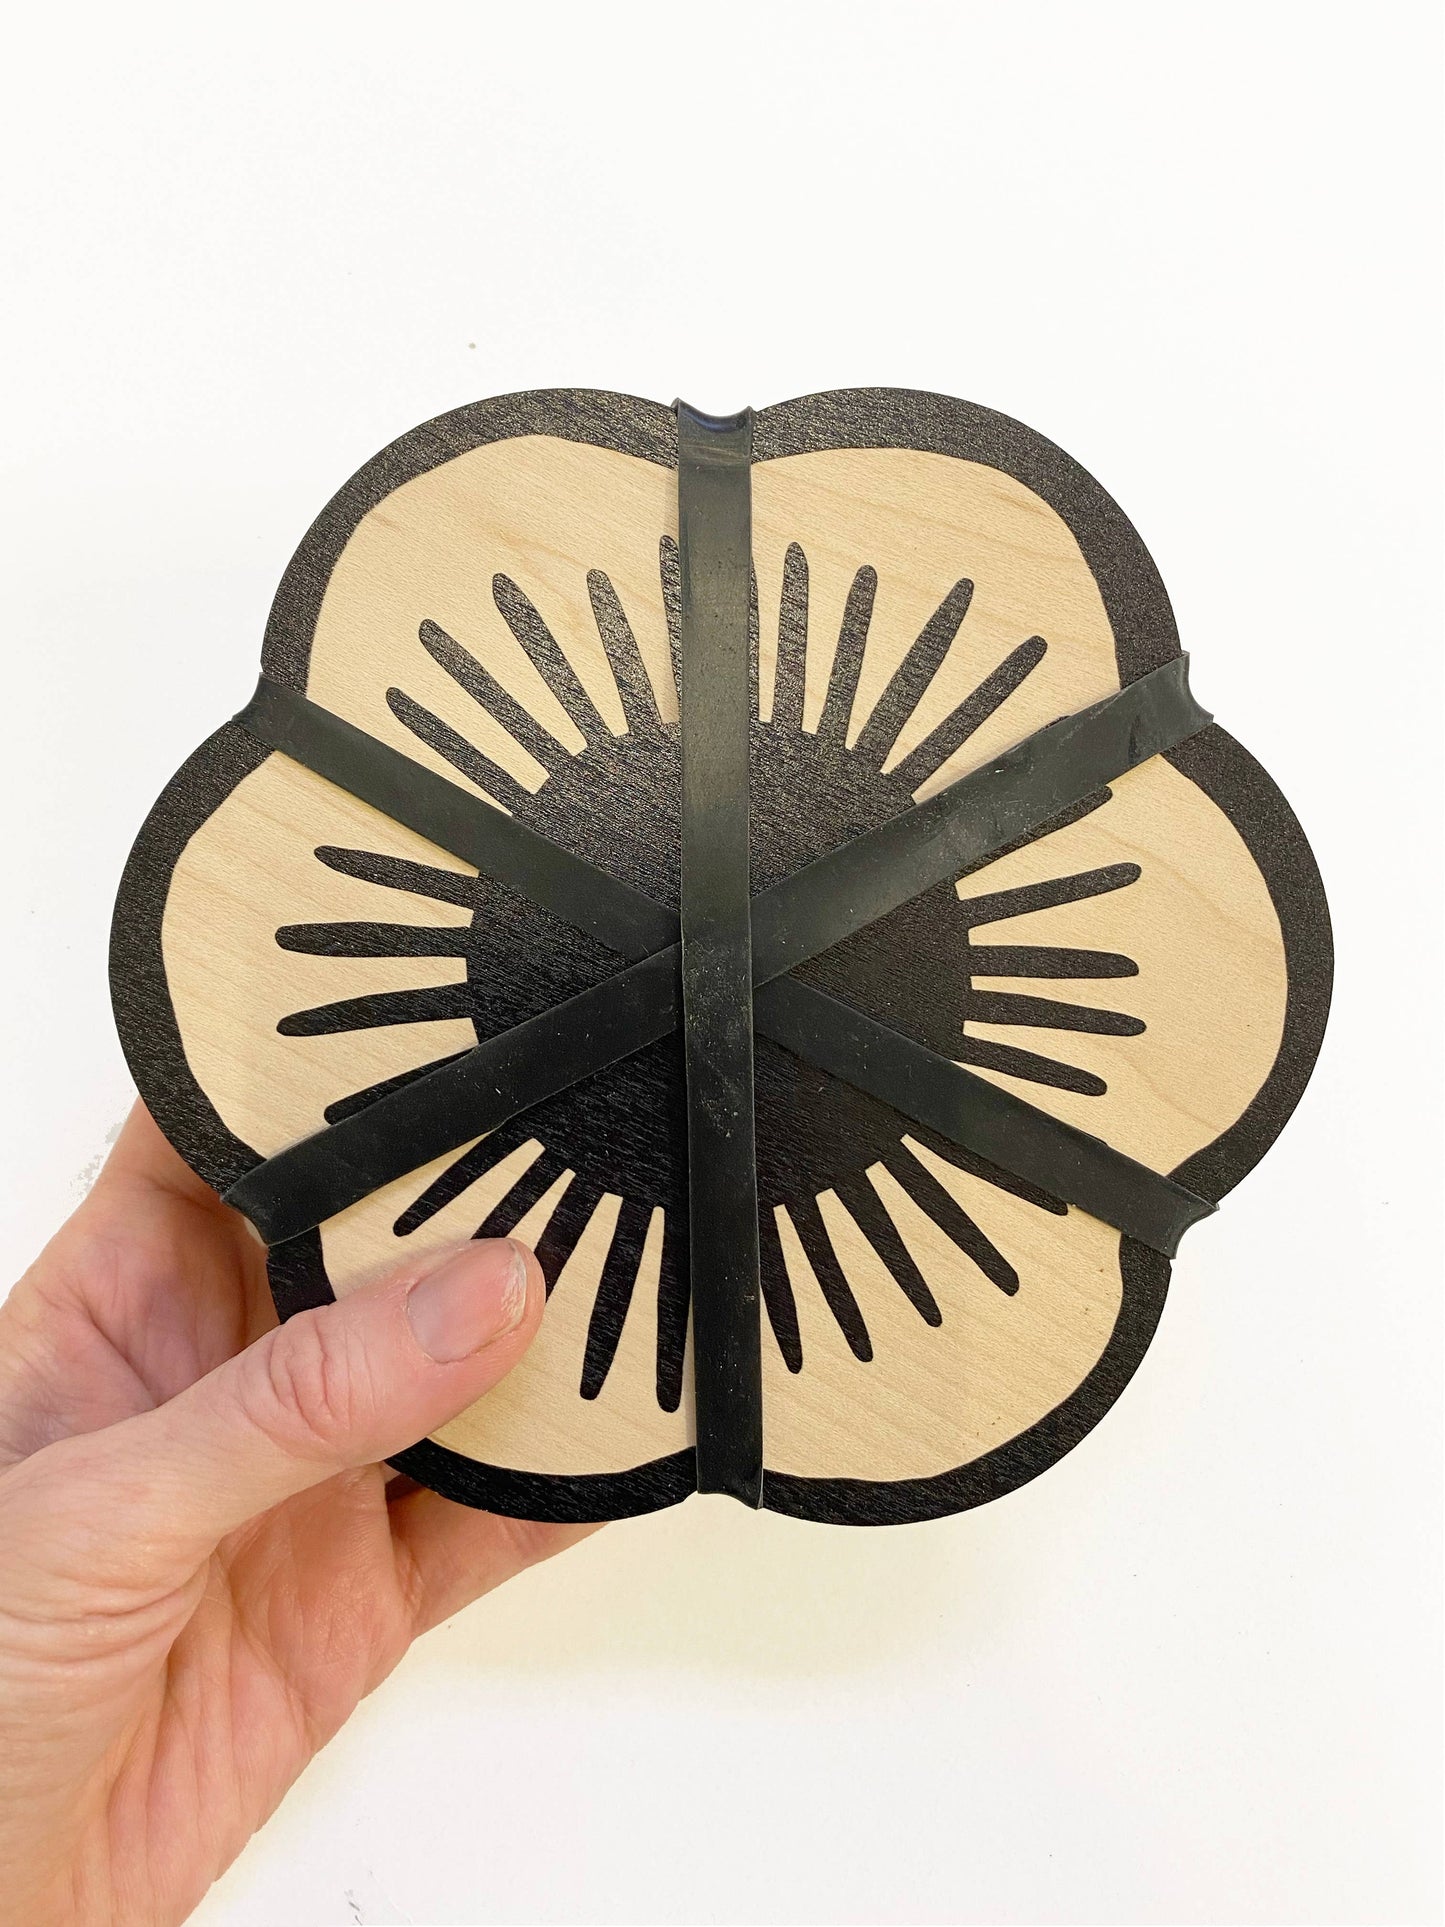 Flower Shaped Press - Silhouette